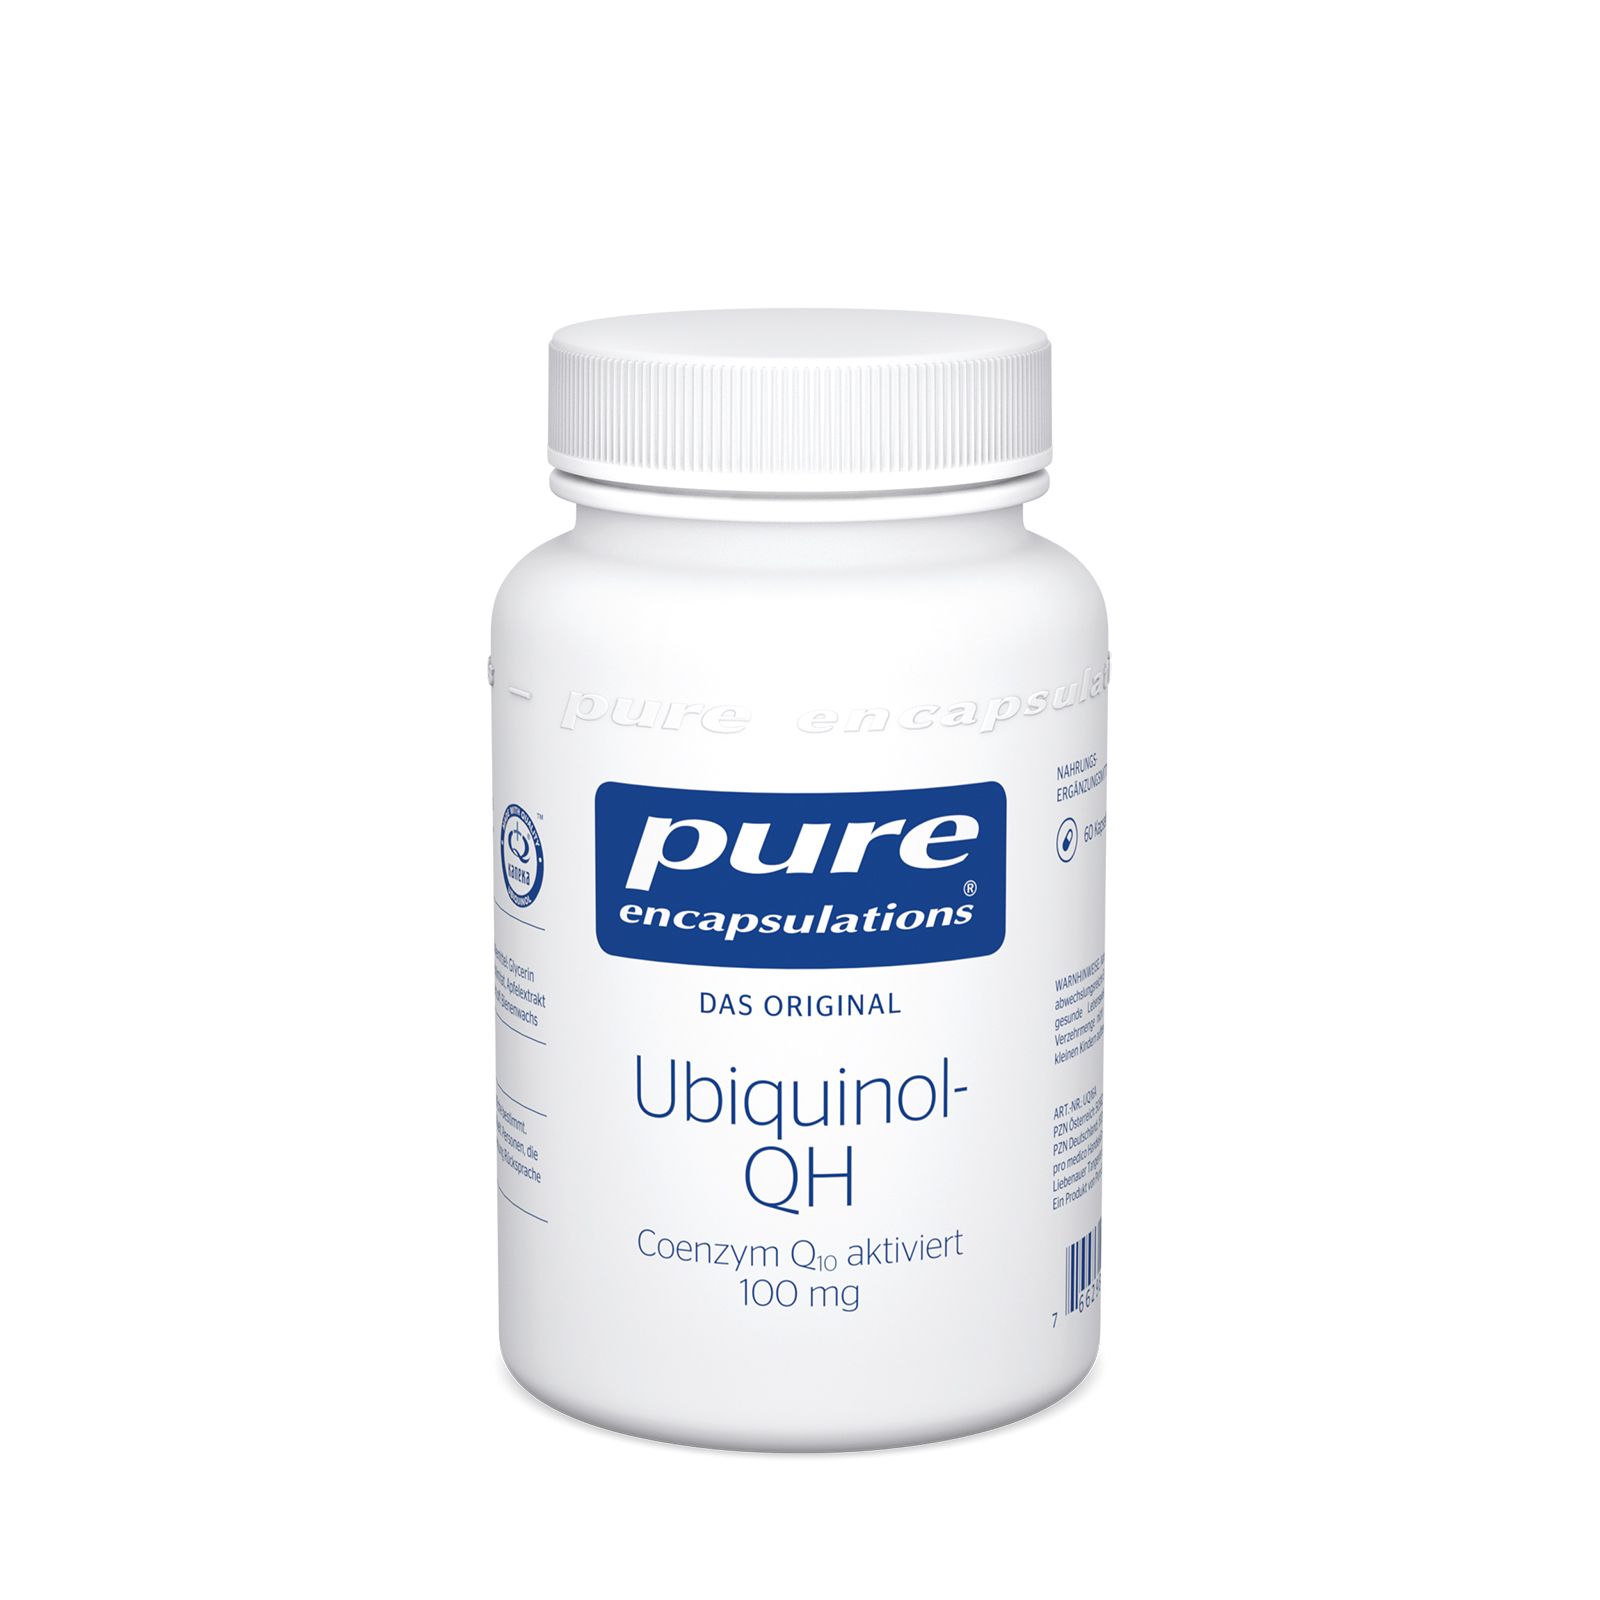 Pure Encapsulations® Ubiquinol-QH 100mg